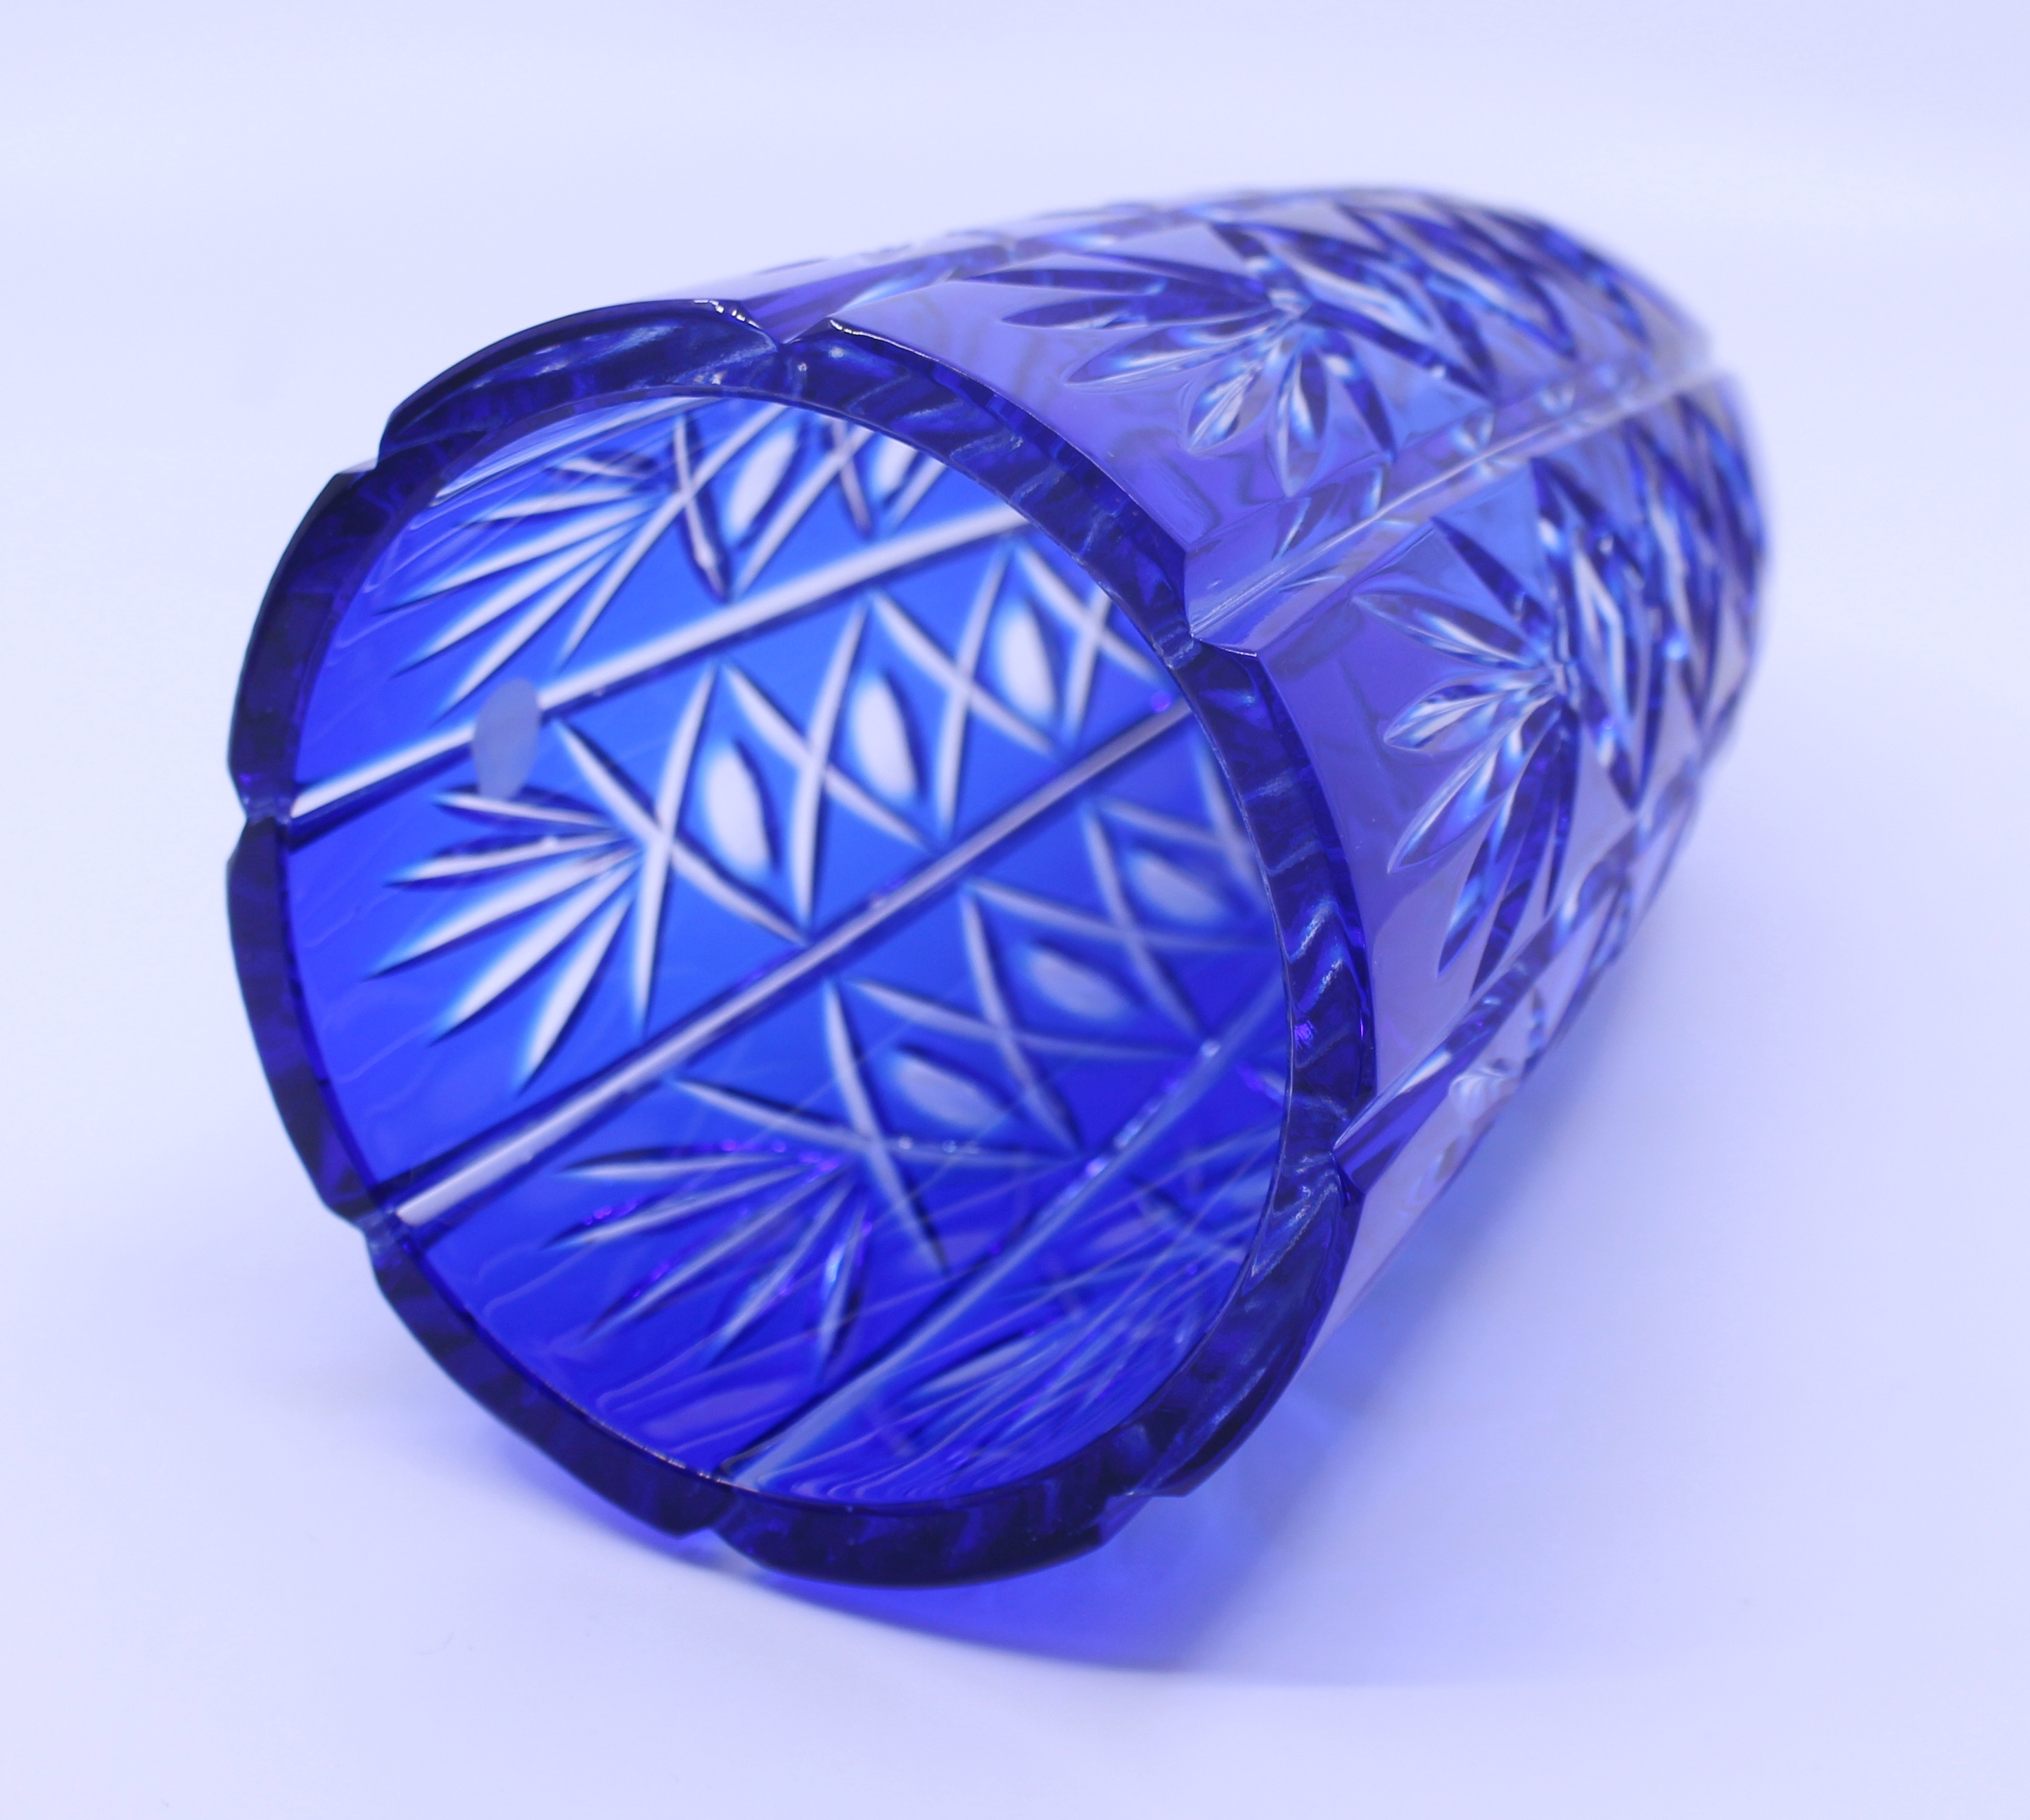 English Vintage Blue Overlay Crystal Glass Vase - Image 2 of 6